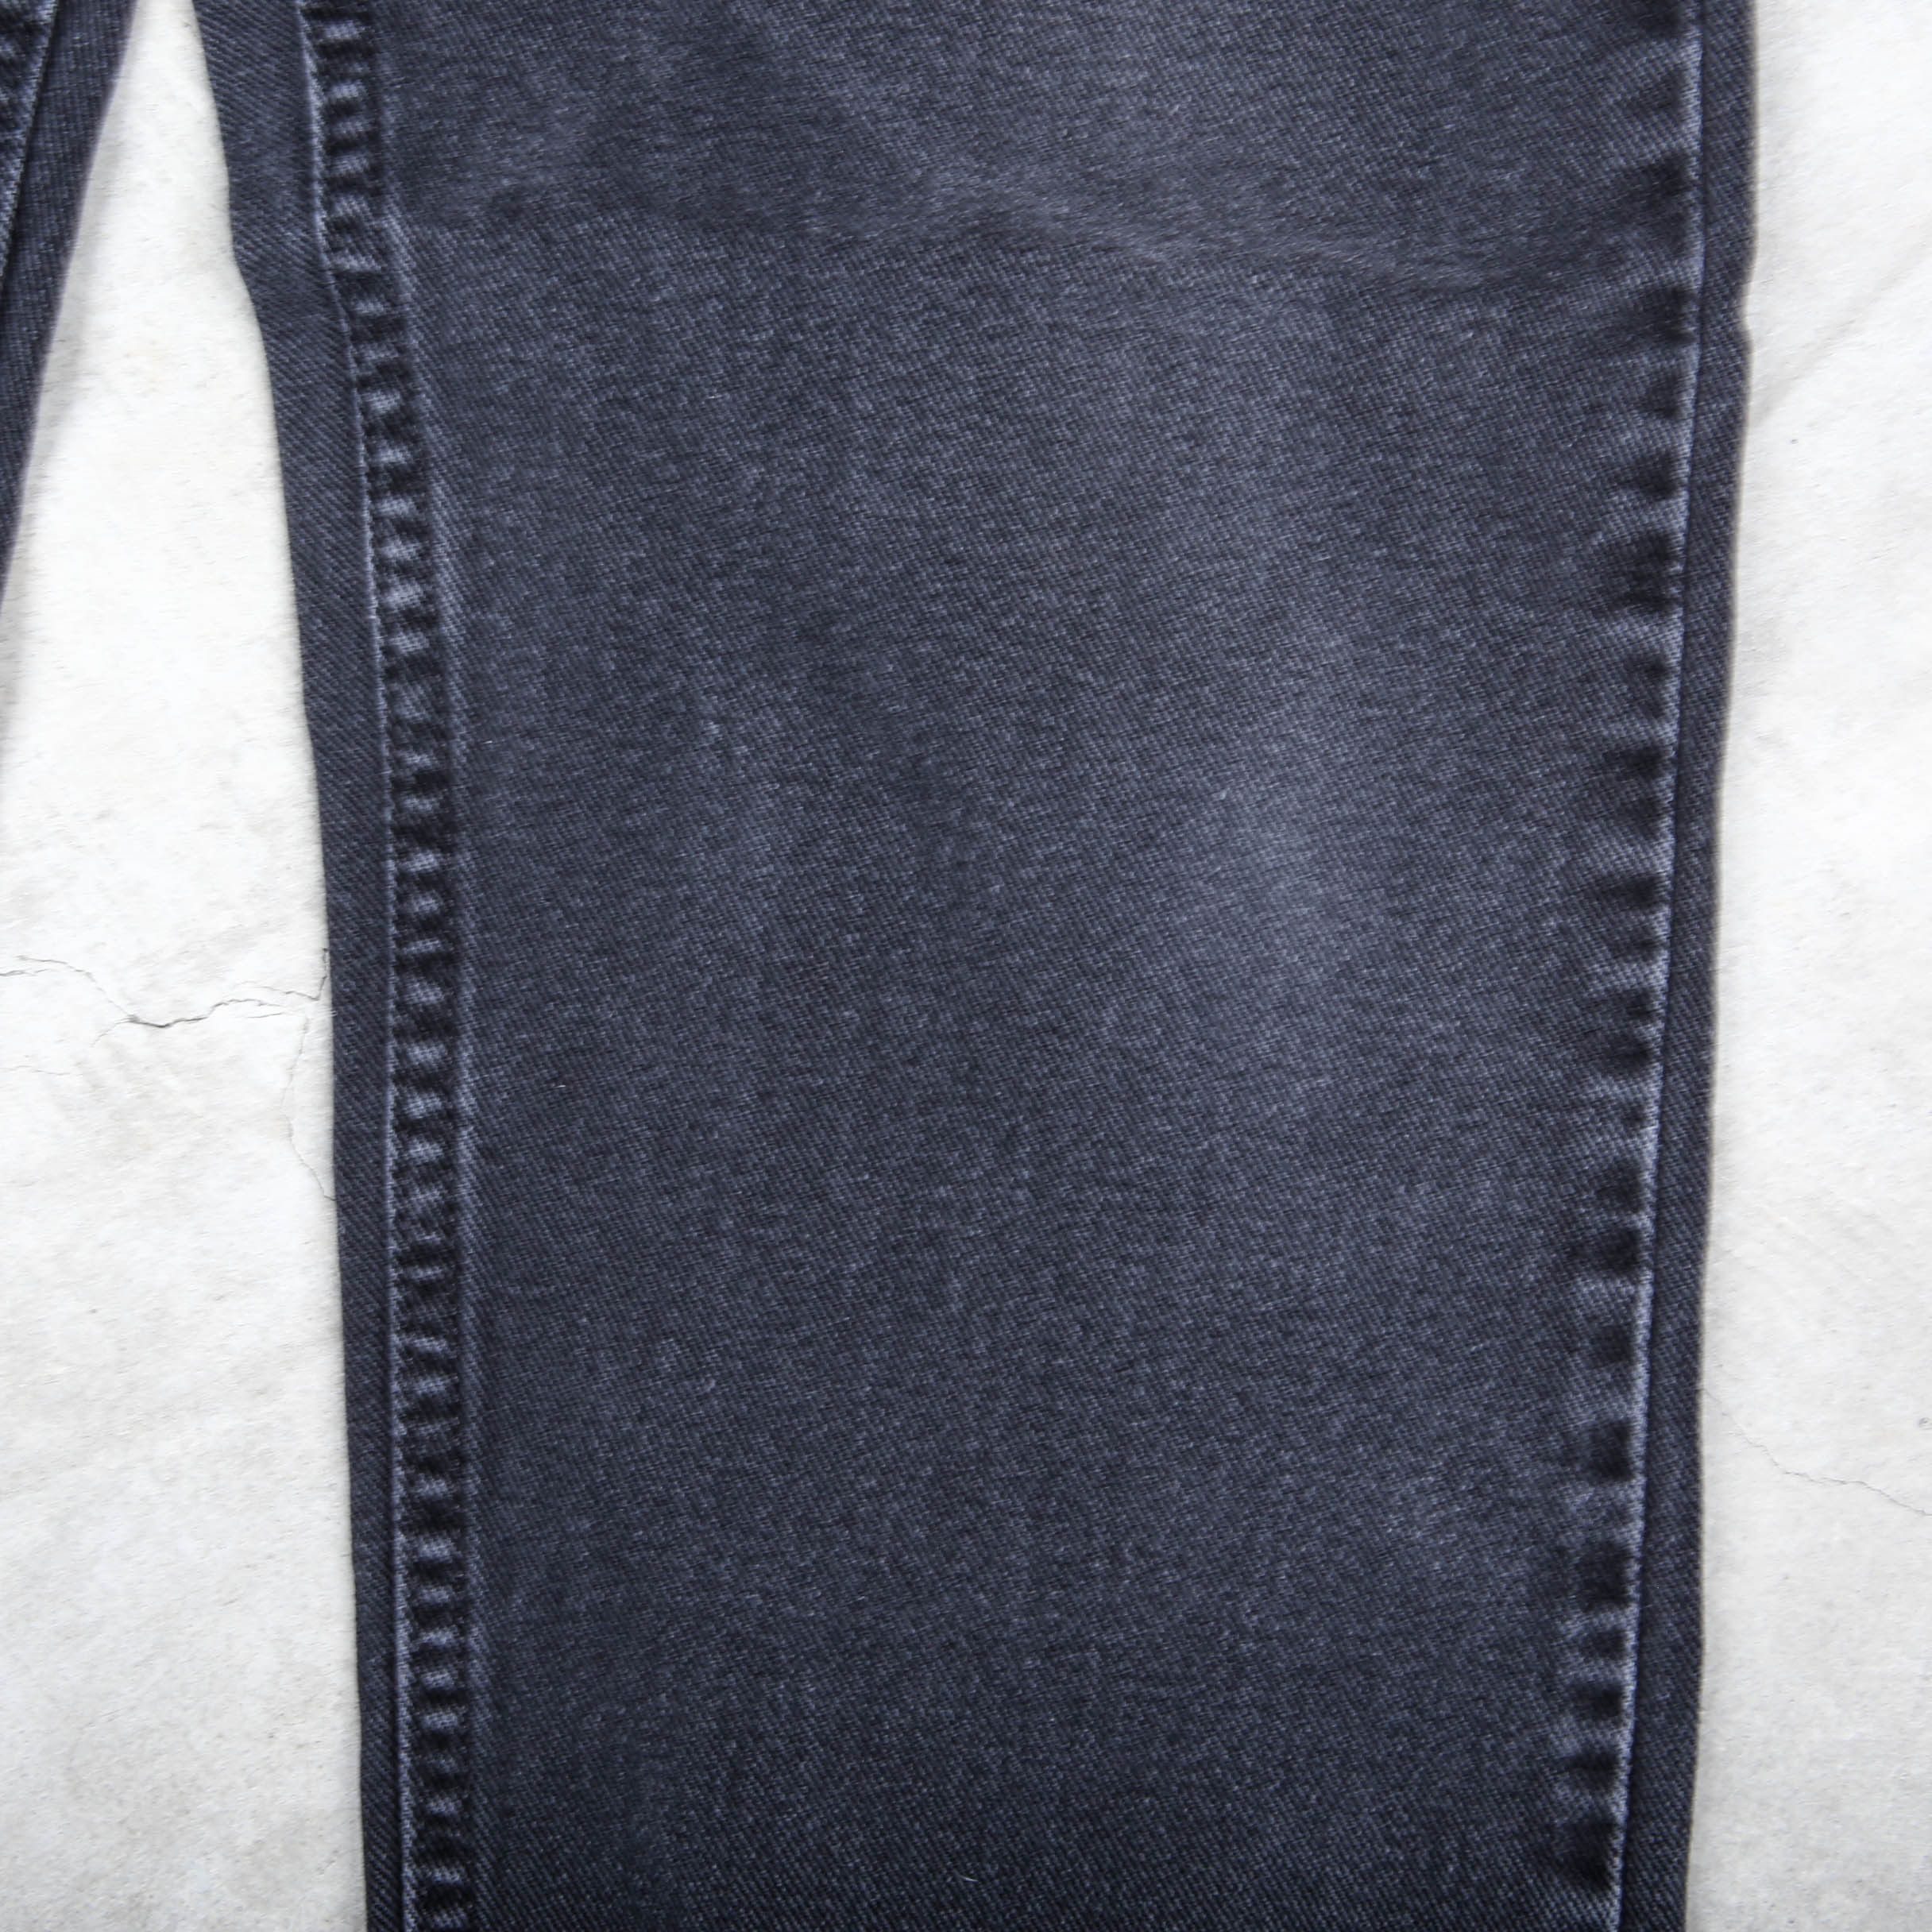 Vintage Vintage Lee's Denim Faded Jeans 33 Late 90s Size US 33 - 6 Thumbnail